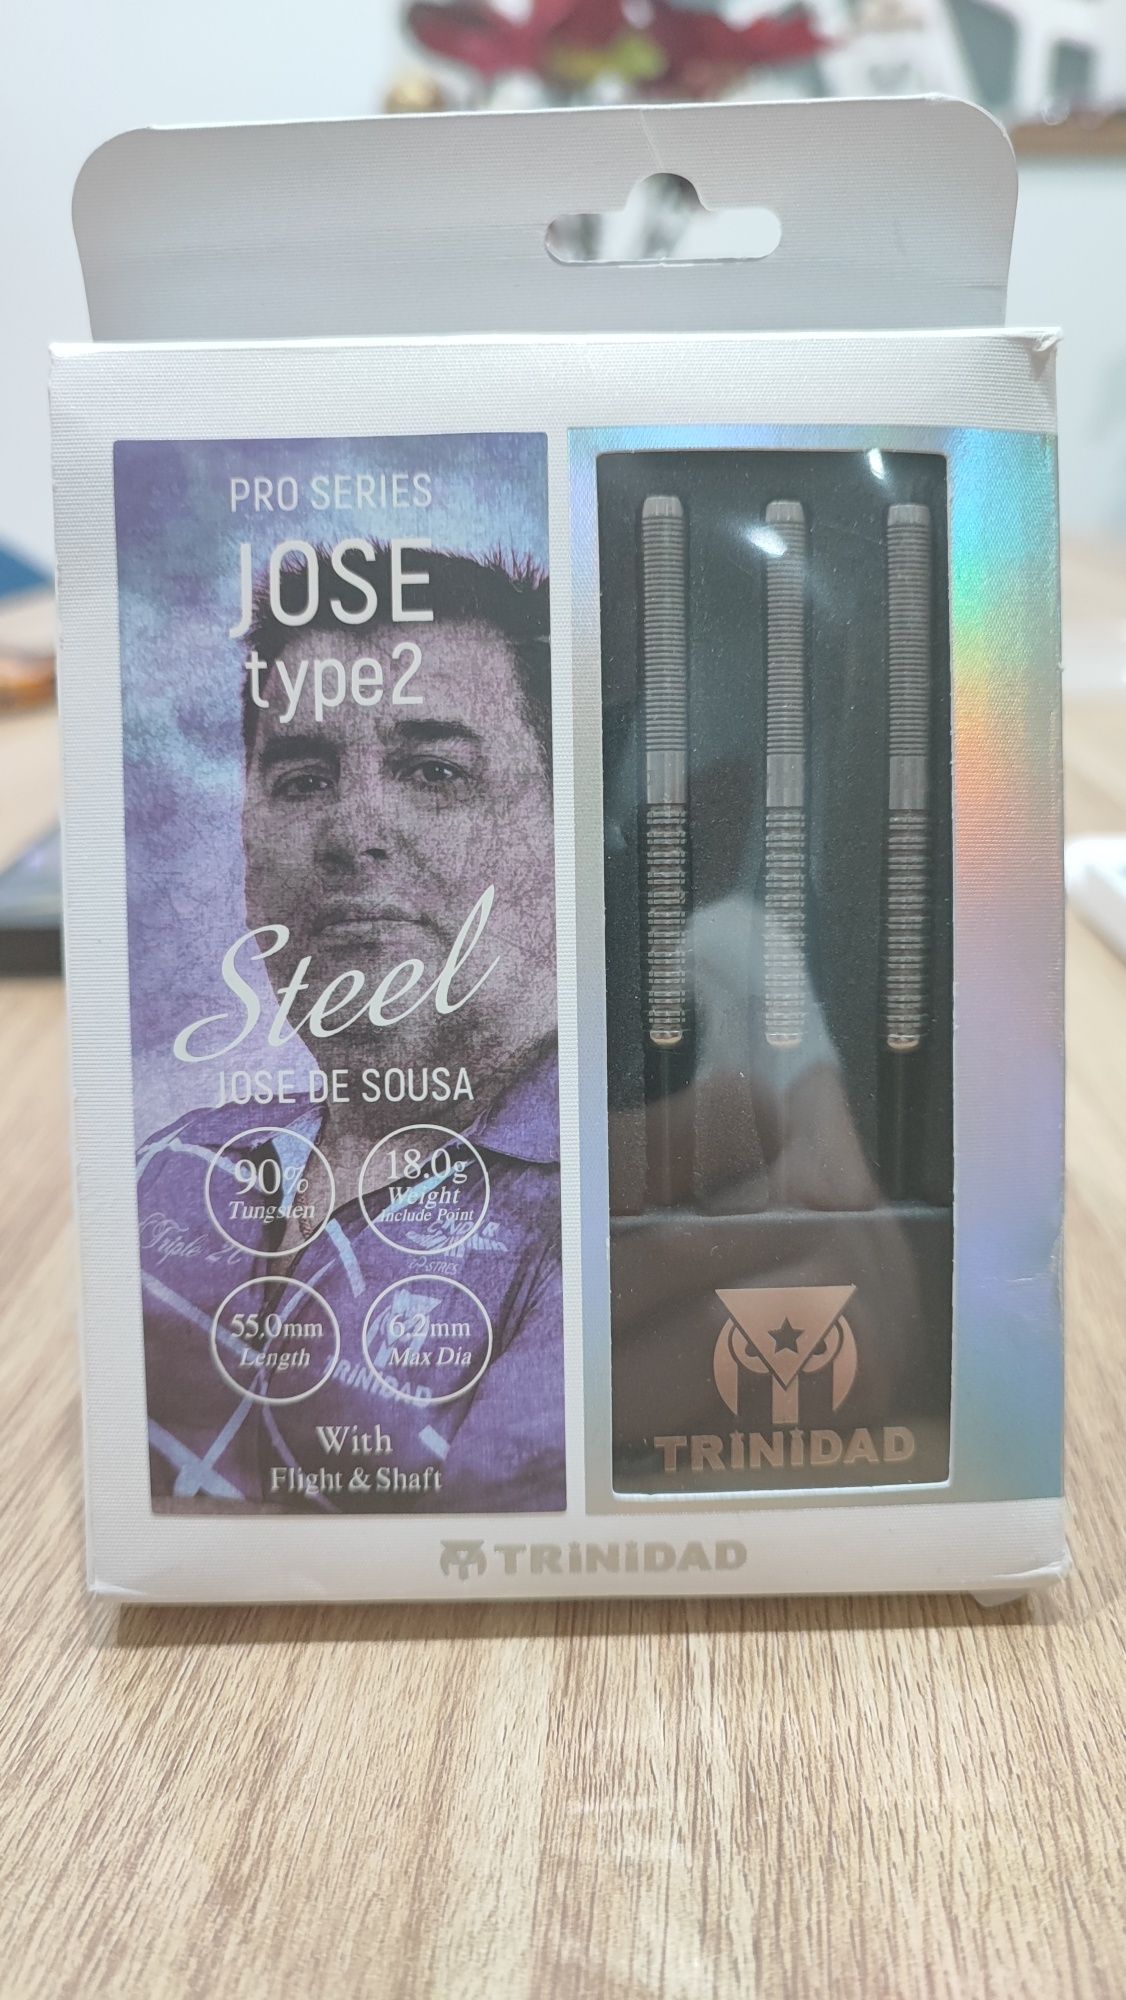 Lotki Trinidad Jose de Sousa – Jose Type 2 18 g 90%